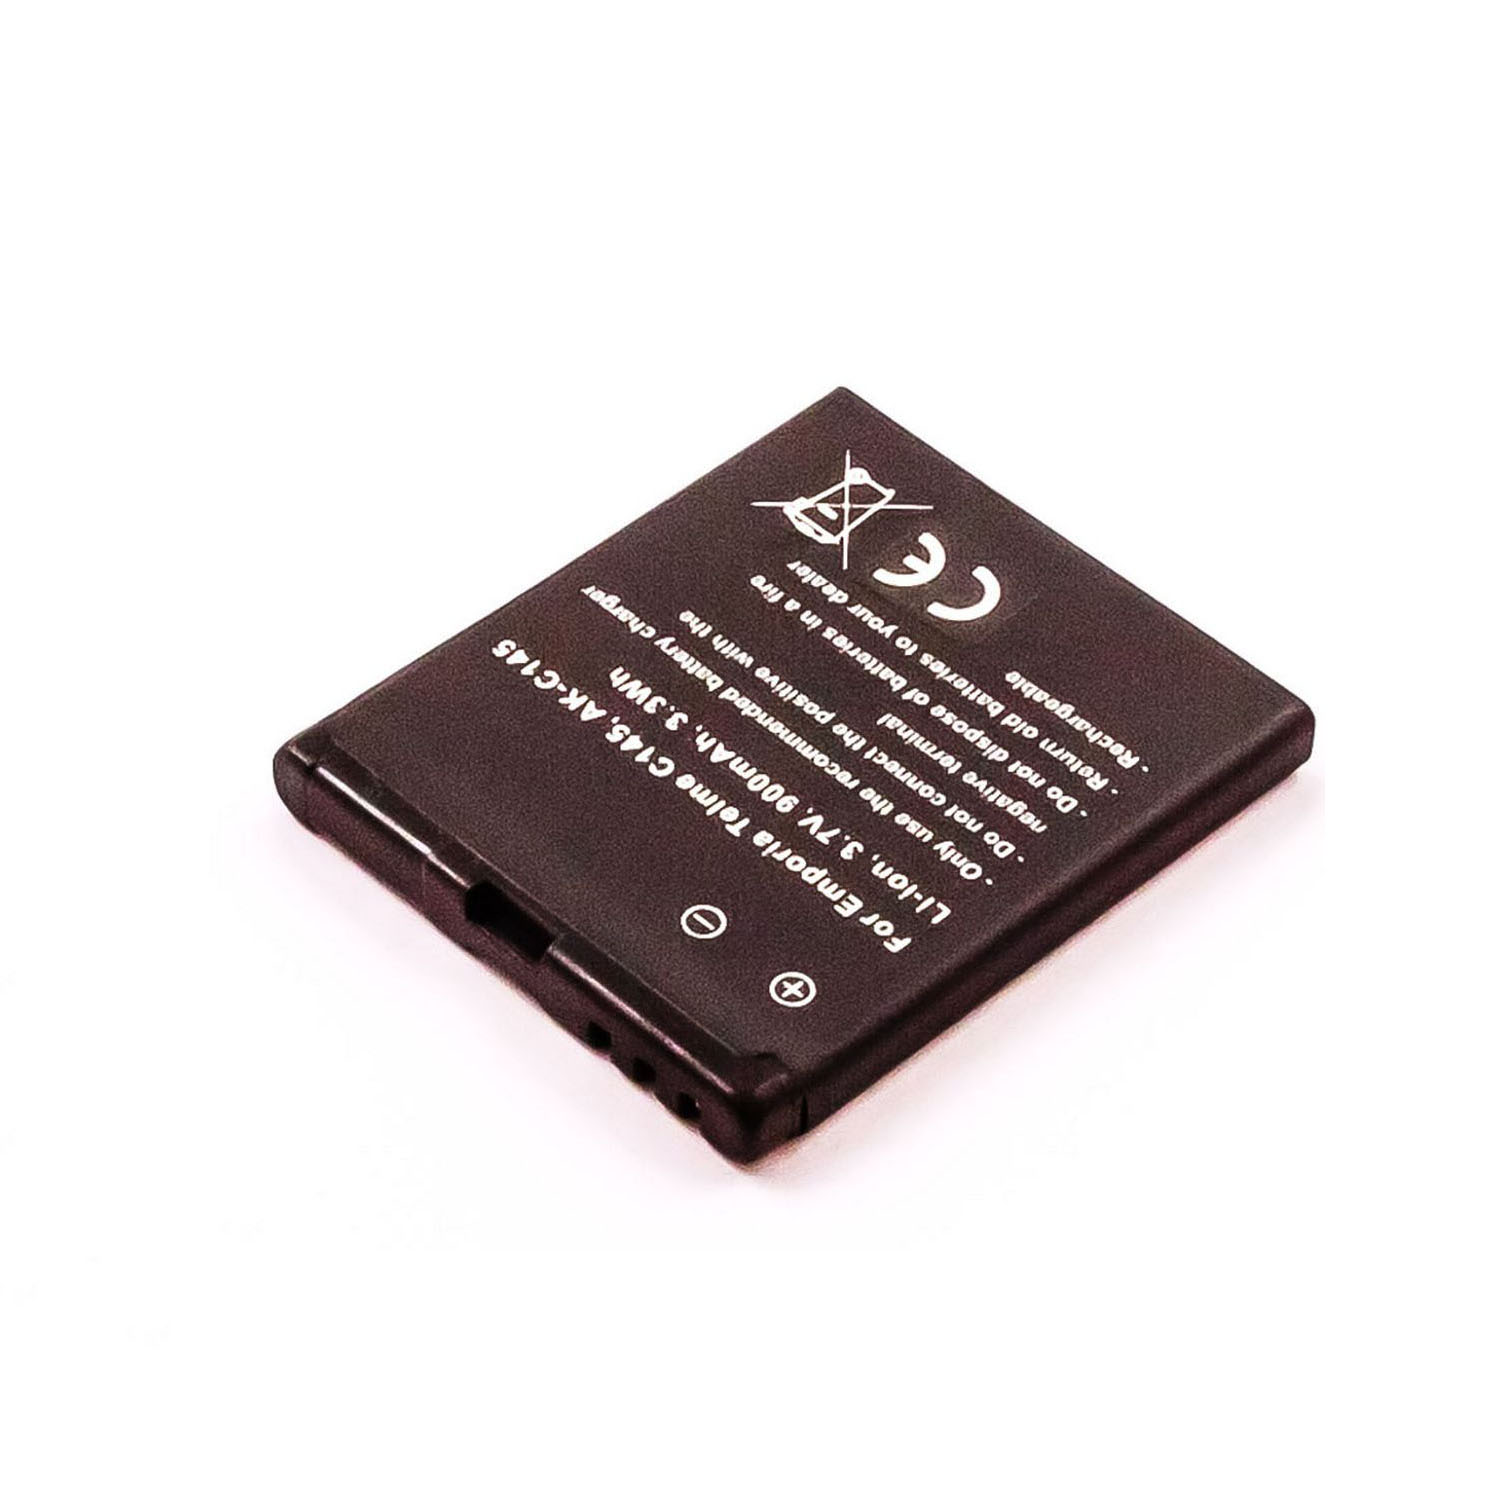 AGI Akku kompatibel mit Handy-/Smartphoneakku, C145|AK-C145 mAh Volt, Li-Ion, Li-Ion 3.7 Telme 700